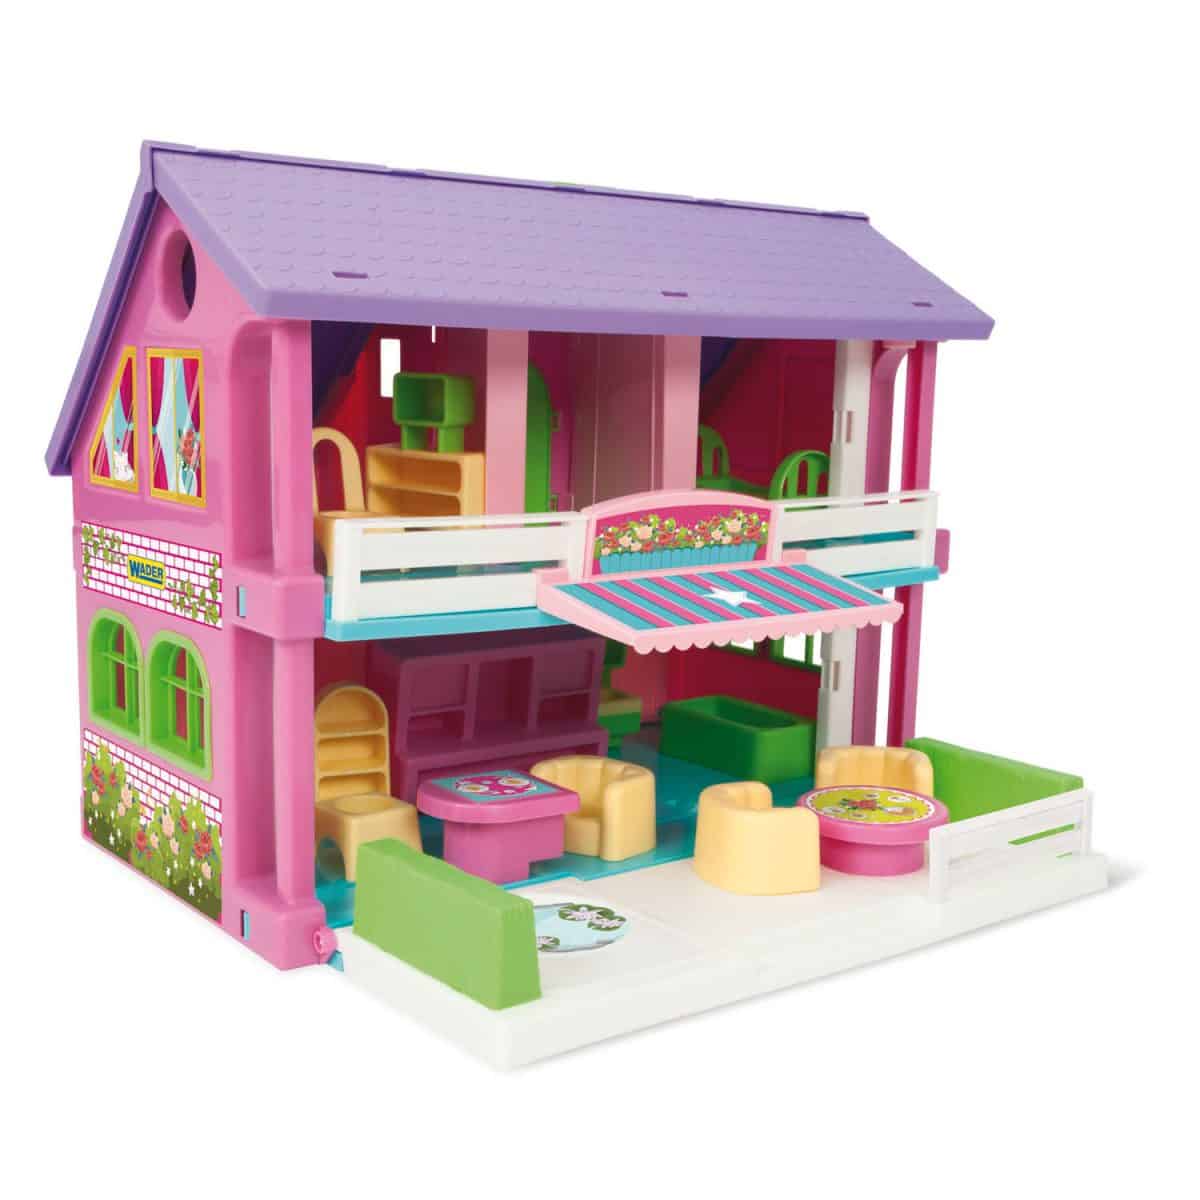 Play House domek dla lalek